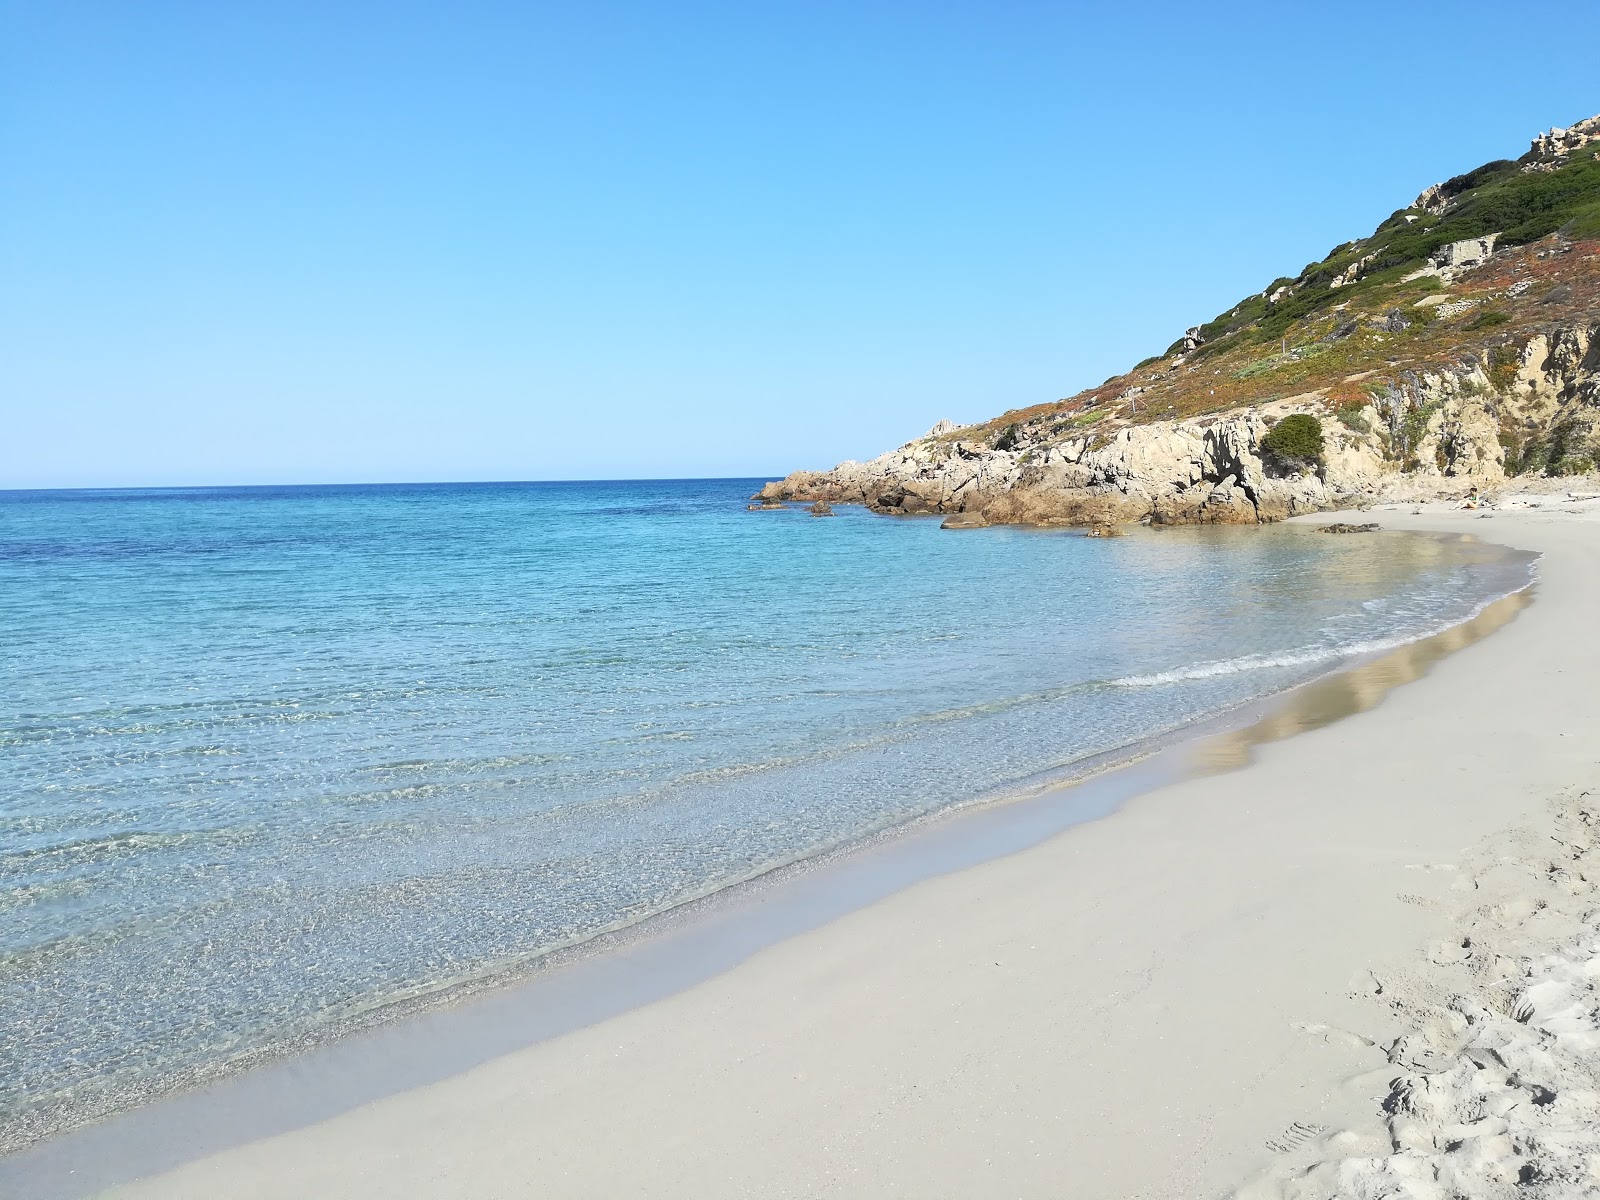 Photo of Spiaggia La Liccia with spacious multi bays